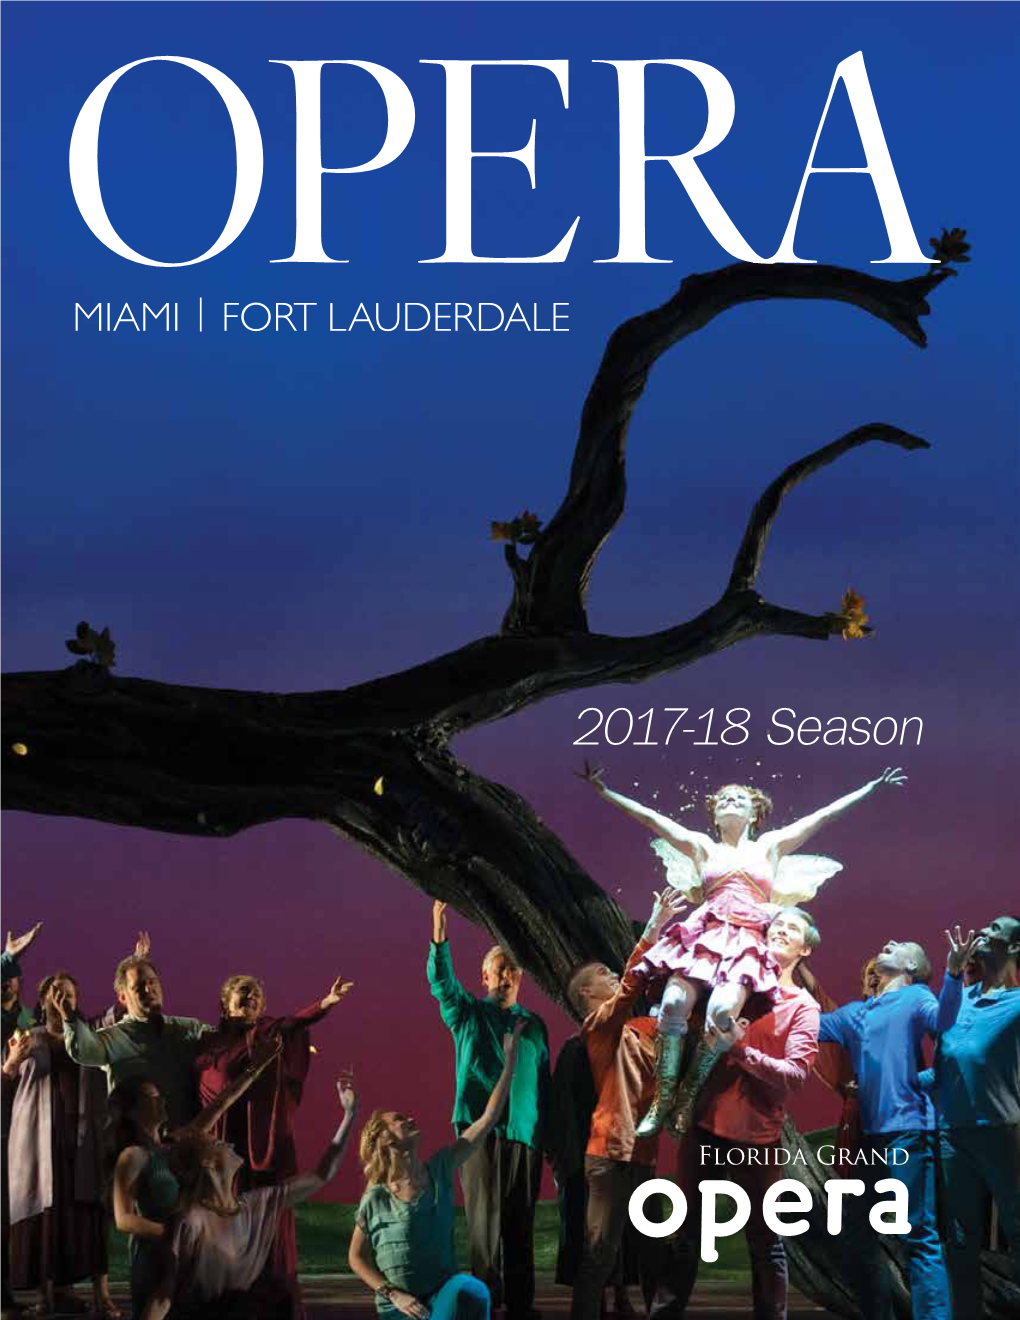 2017-18 Season Welcome to the 2017-18 Season of Florida Grand Opera!